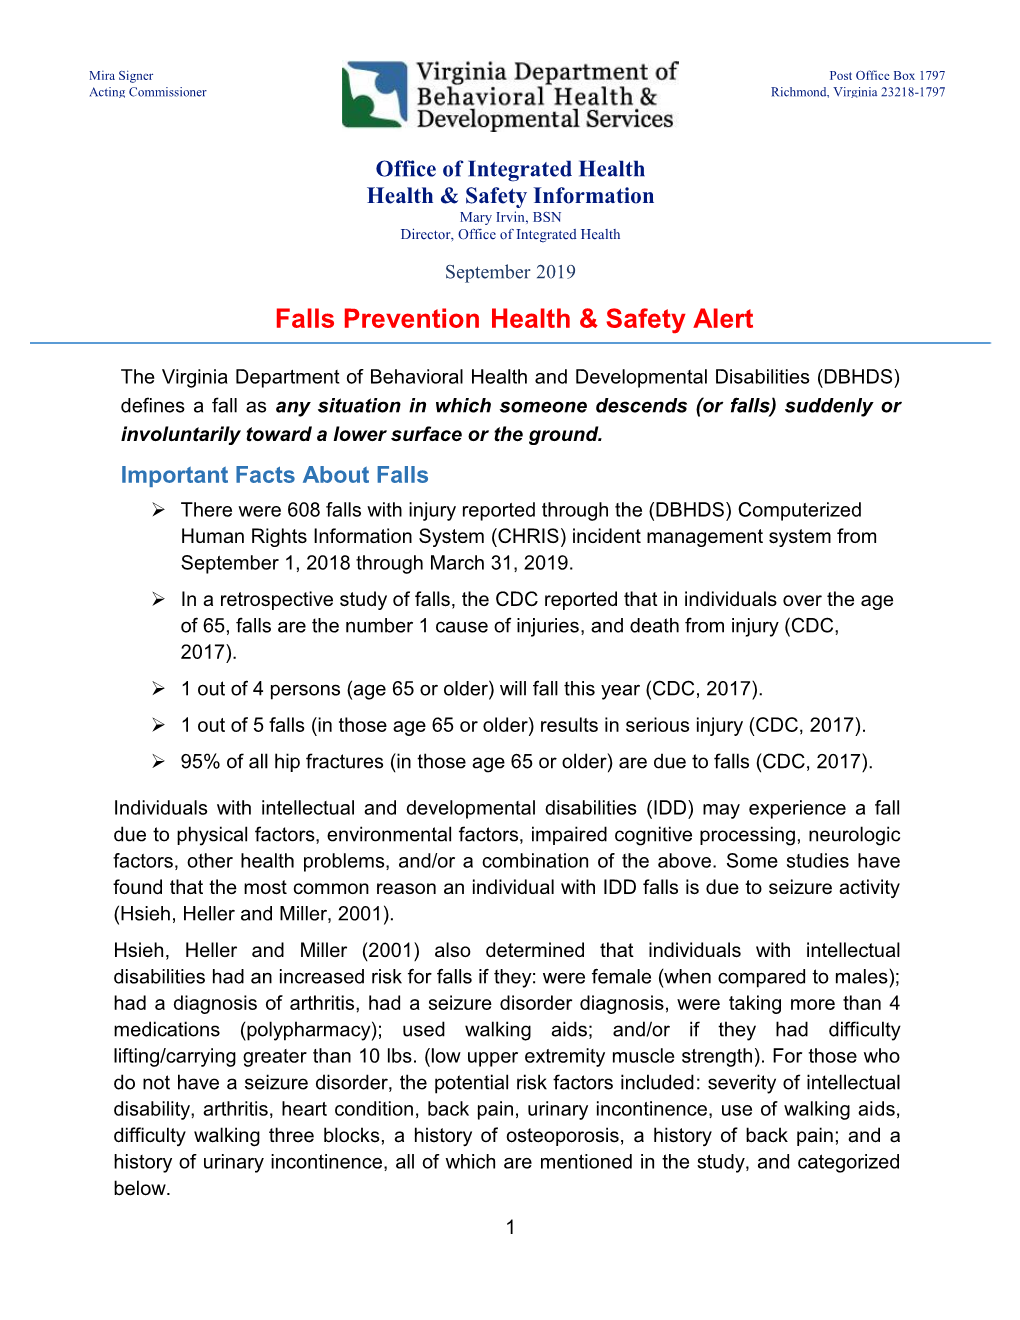 Falls Prevention Health & Safety Alert